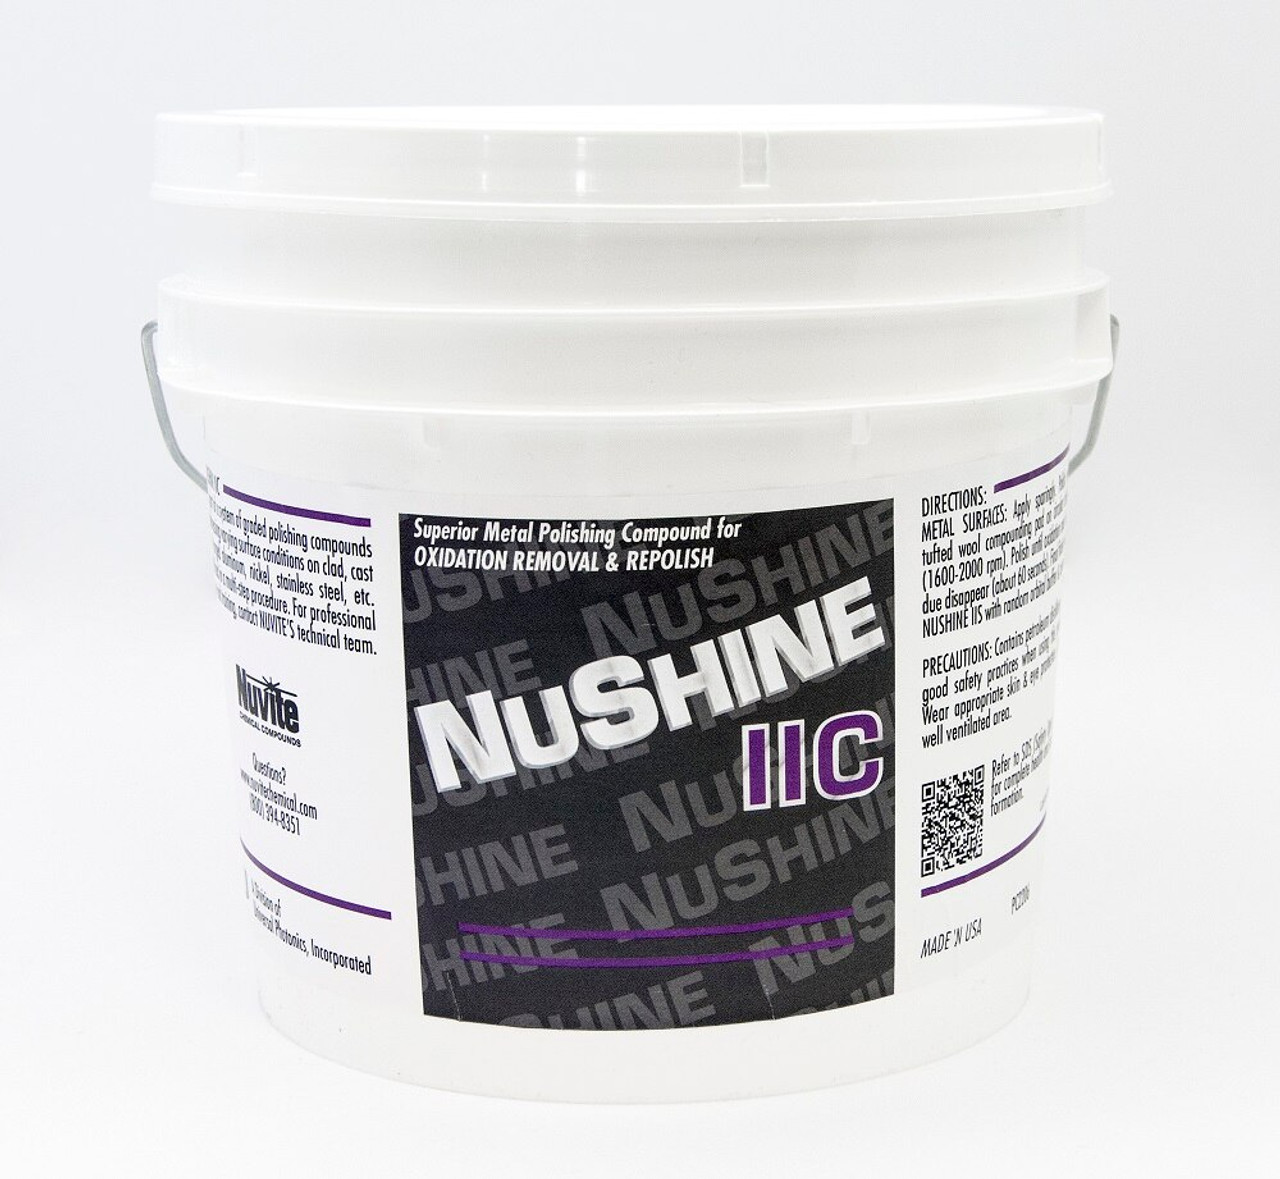 Nuvite PC220610LB Nushine II Grade C Oxidation Removal & Repolish Metal  Polishing Compound - 10 lb Pail at